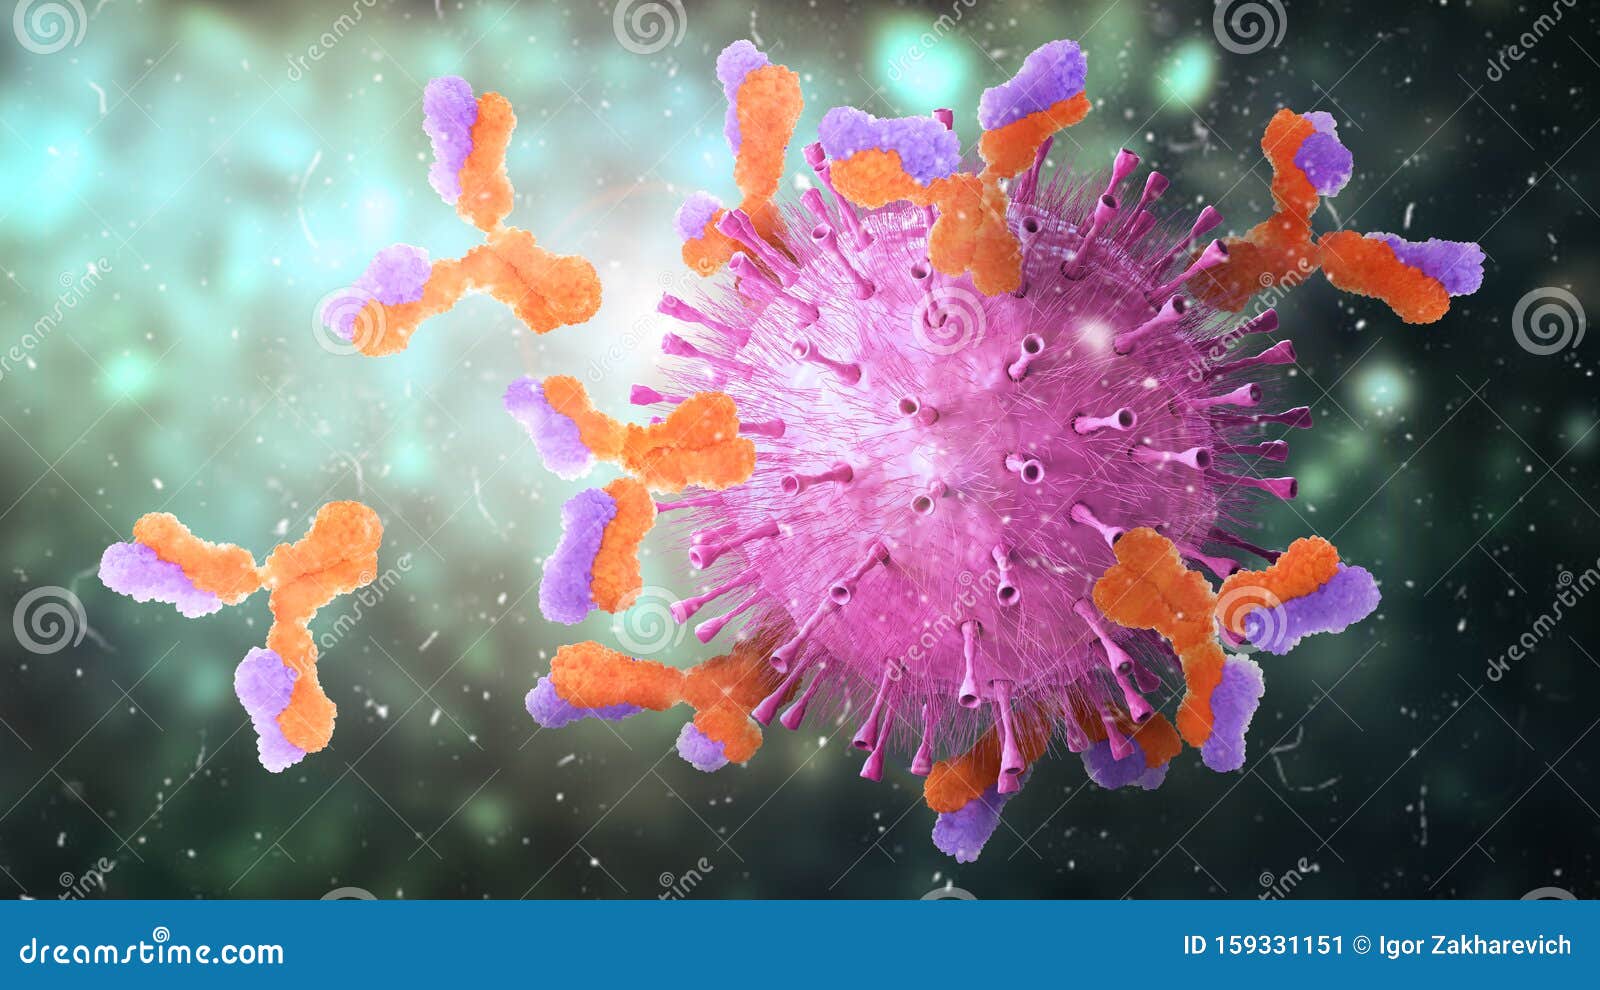 microbiology. antibodies attack virus